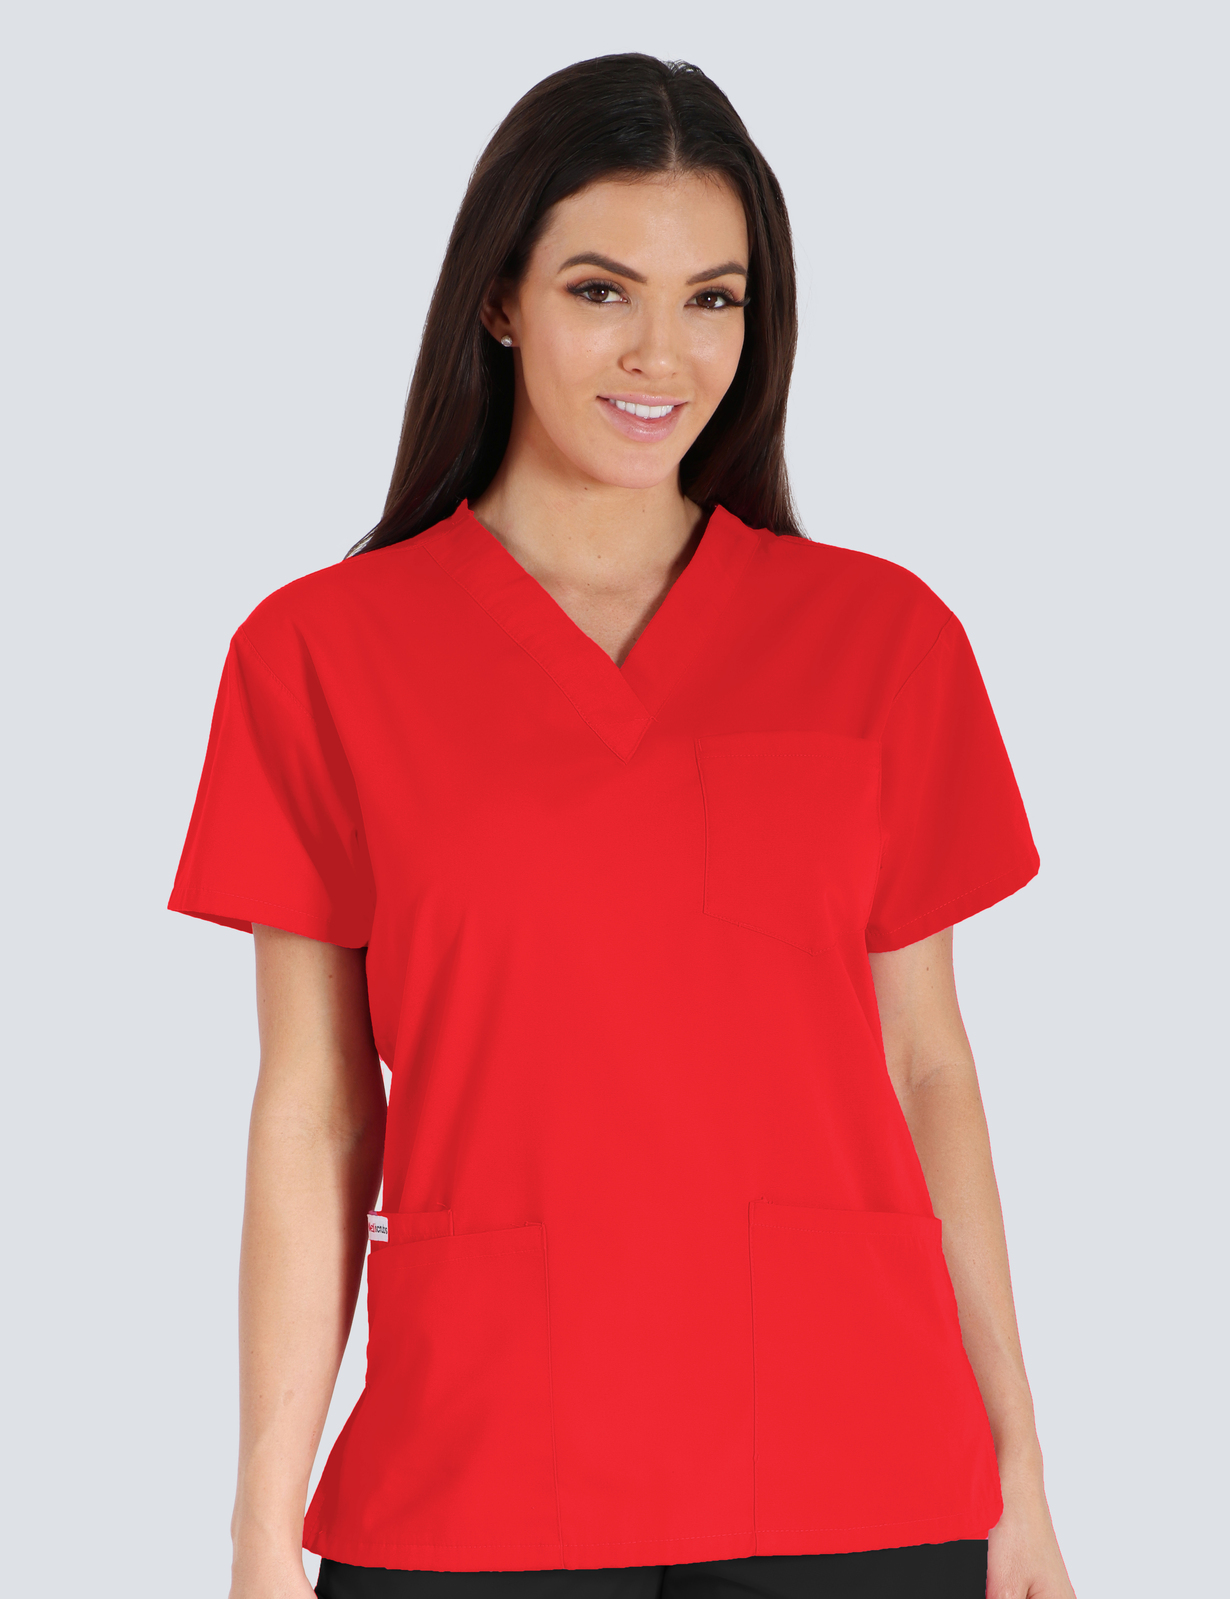 Rockhampton Base Hospital - ED Shift Cooordinator (4 Pocket Scrub Top in Red incl Logos)